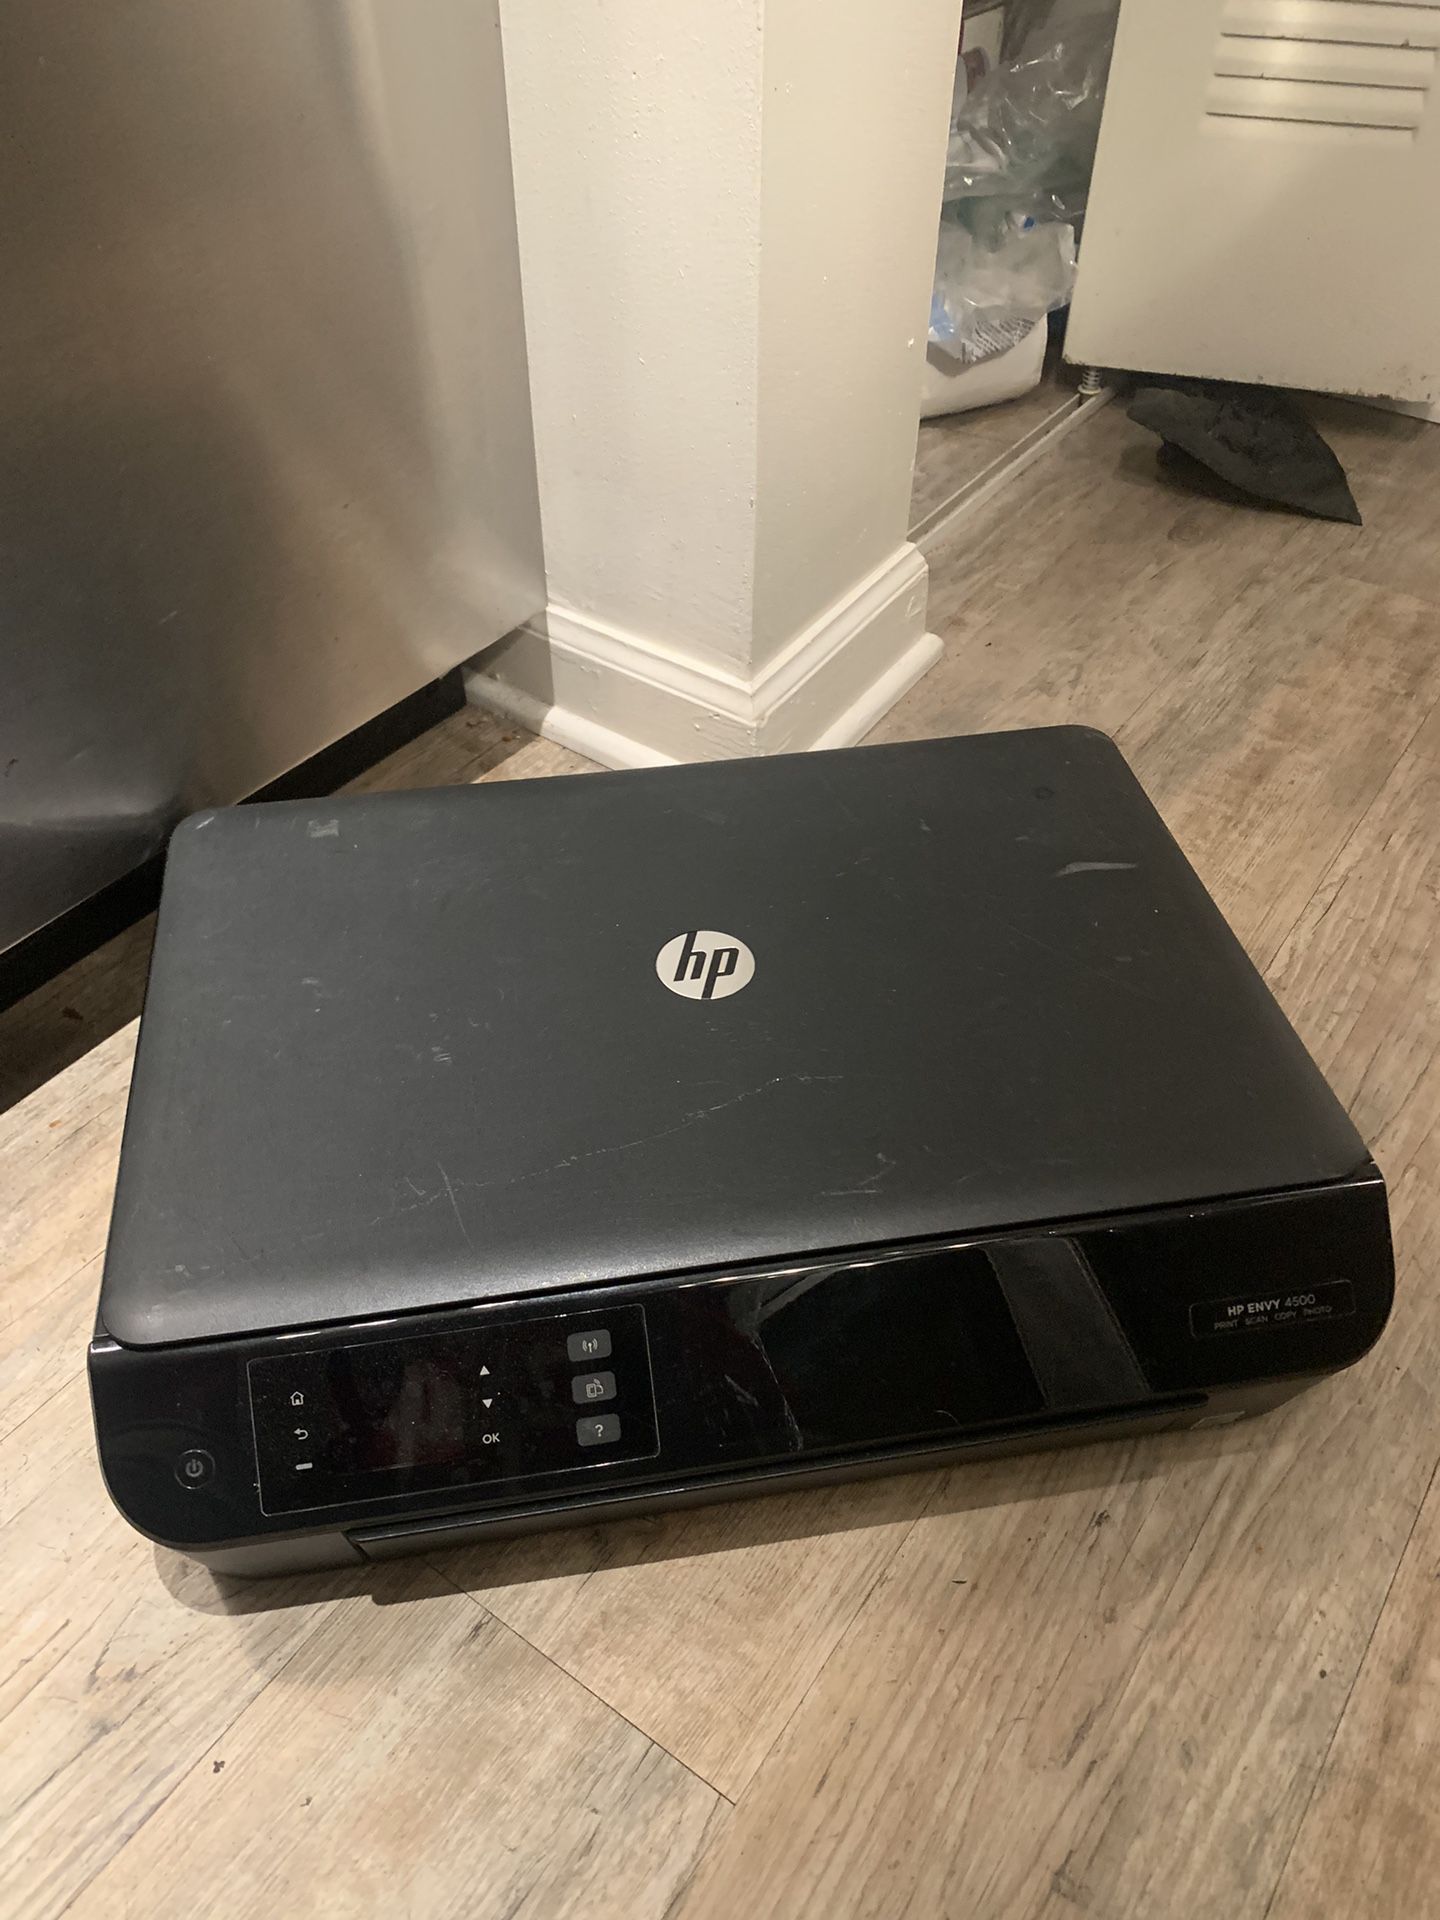 HP Envy 4500 ALL-IN-ONE Inkjet Printer Scan Copy WiFi Needs Ink